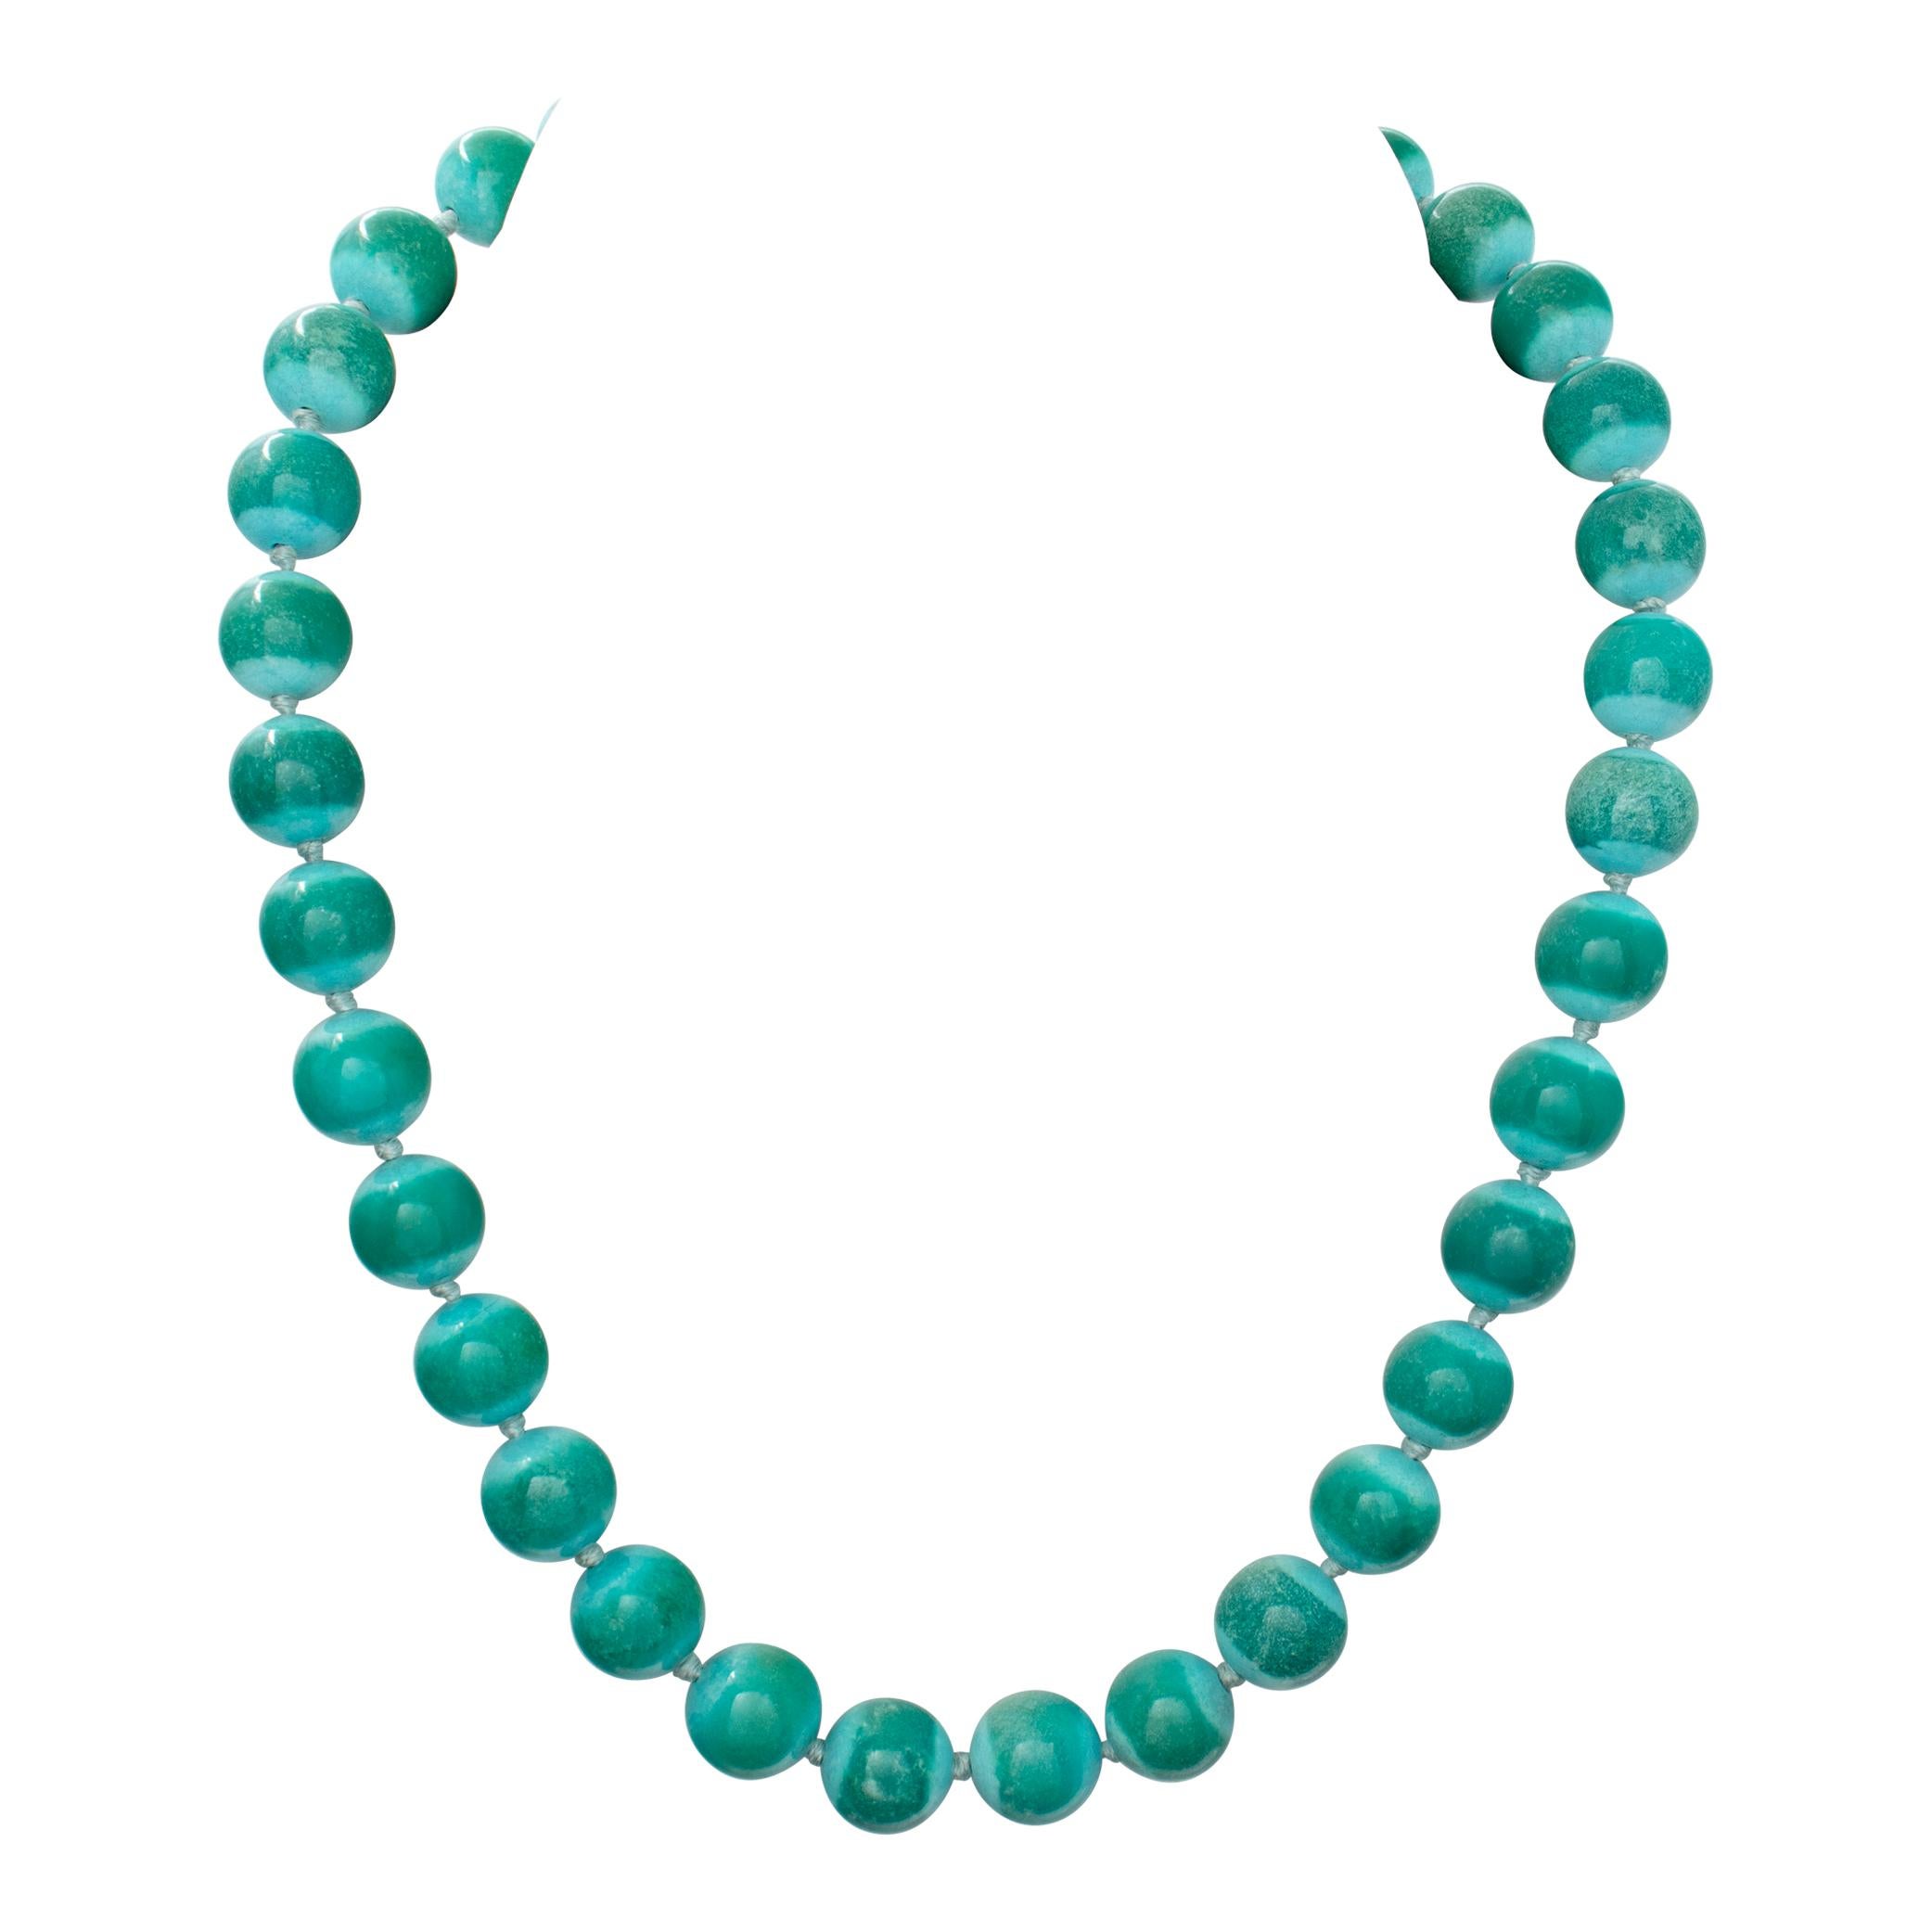 Angela Cummings Collier de perles turquoise avec fermoir en or 18 carats